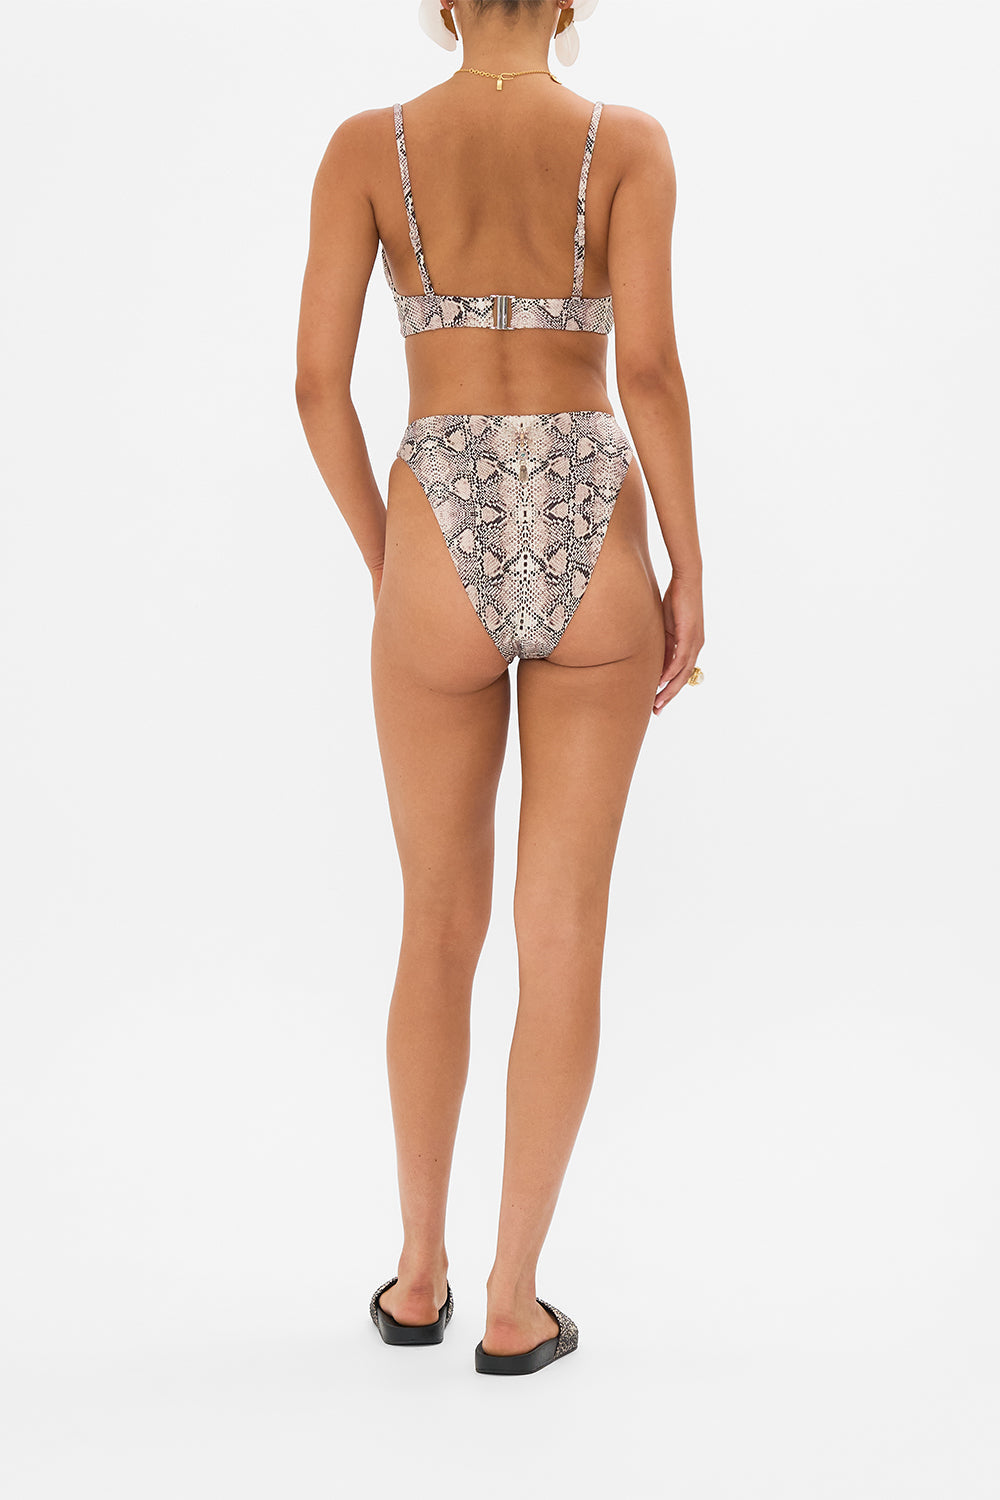 CAMILLA high waisted bikini bottoms in Looking Glass Houses print